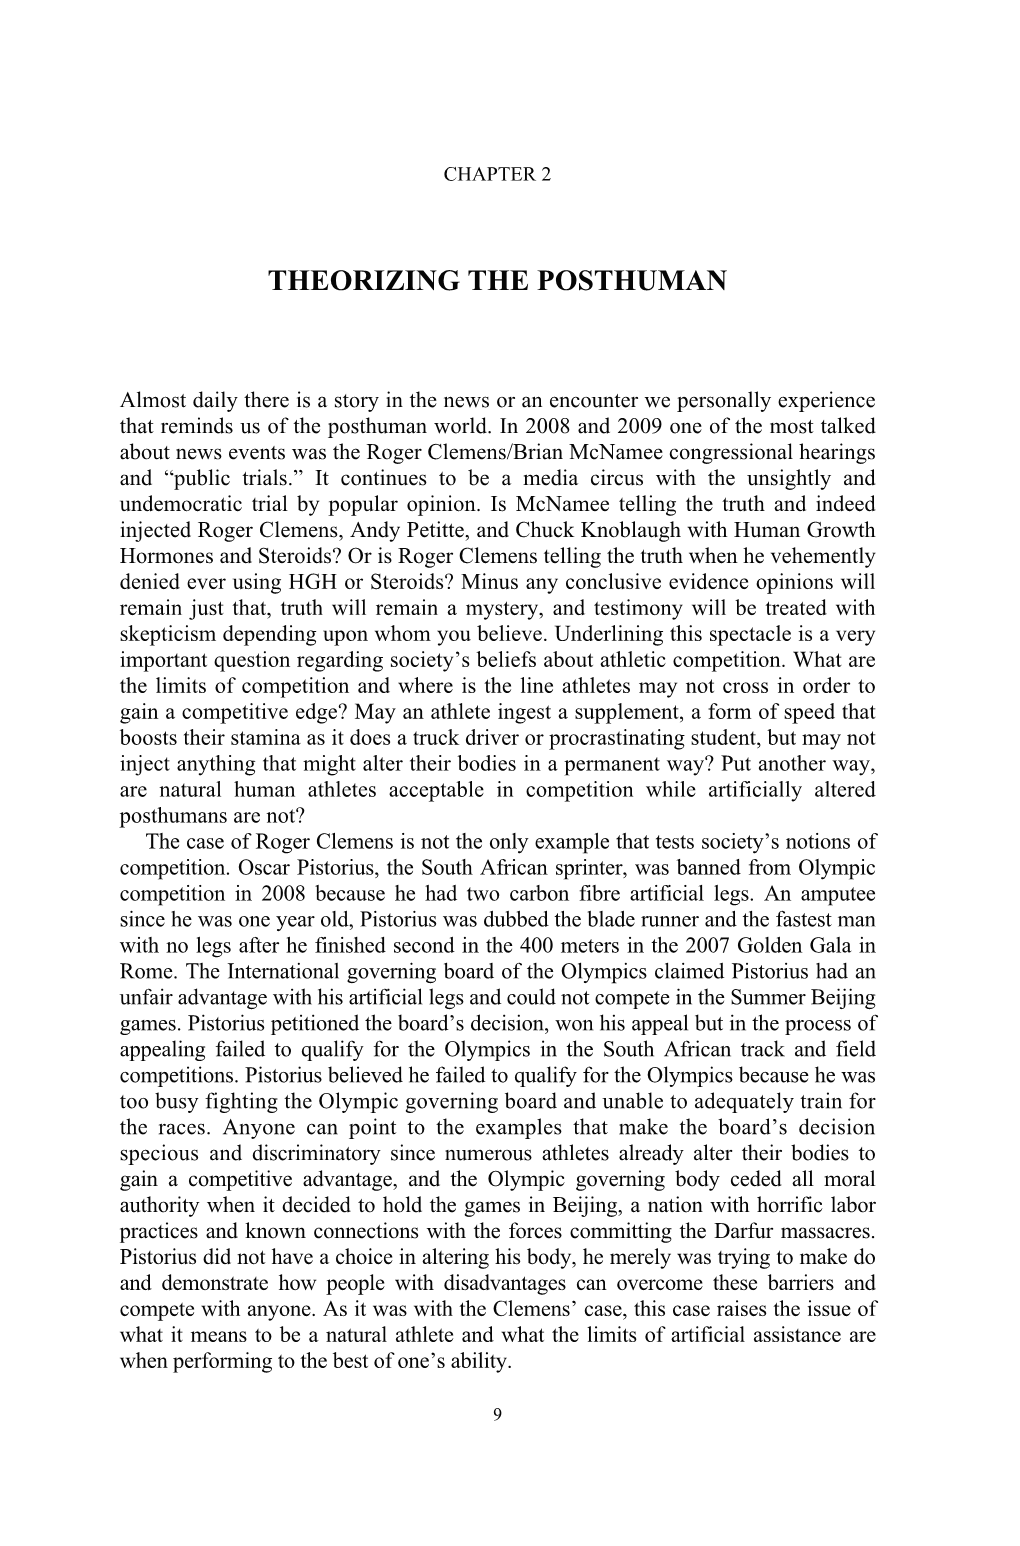 Theorizing the Posthuman